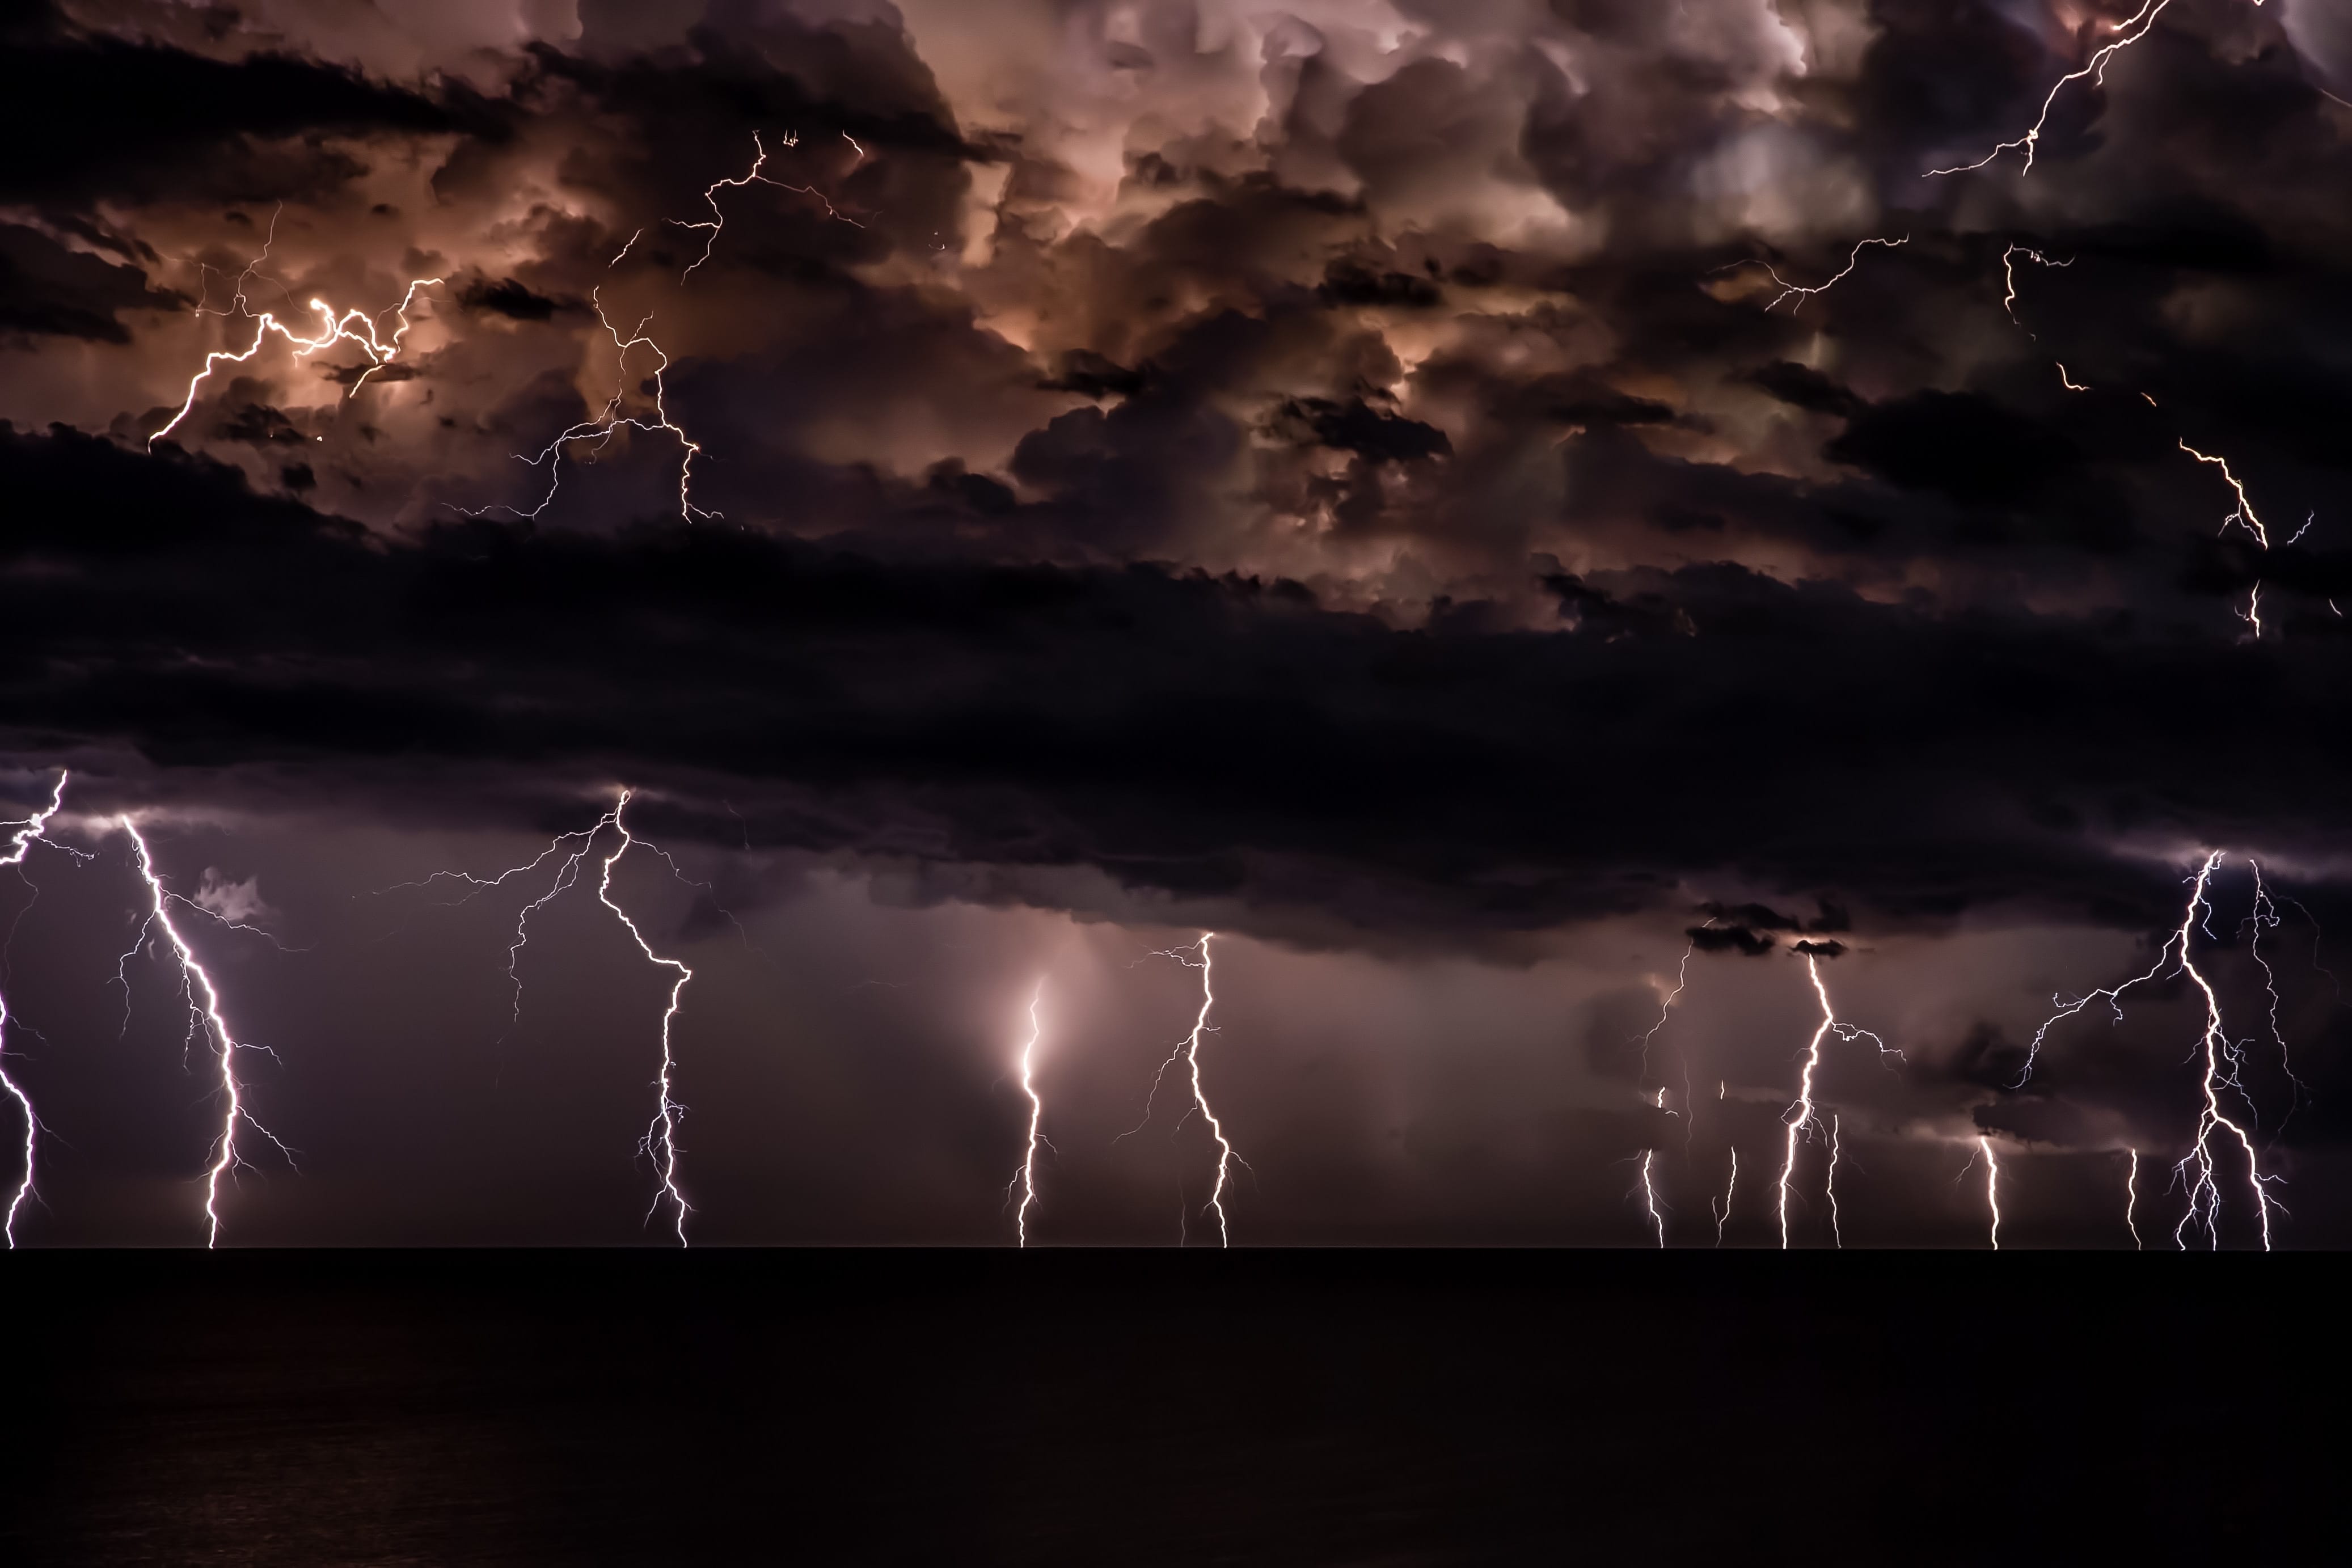 Thunderstorm with dark clouds; image by Josep Castells, via Unsplash.com.